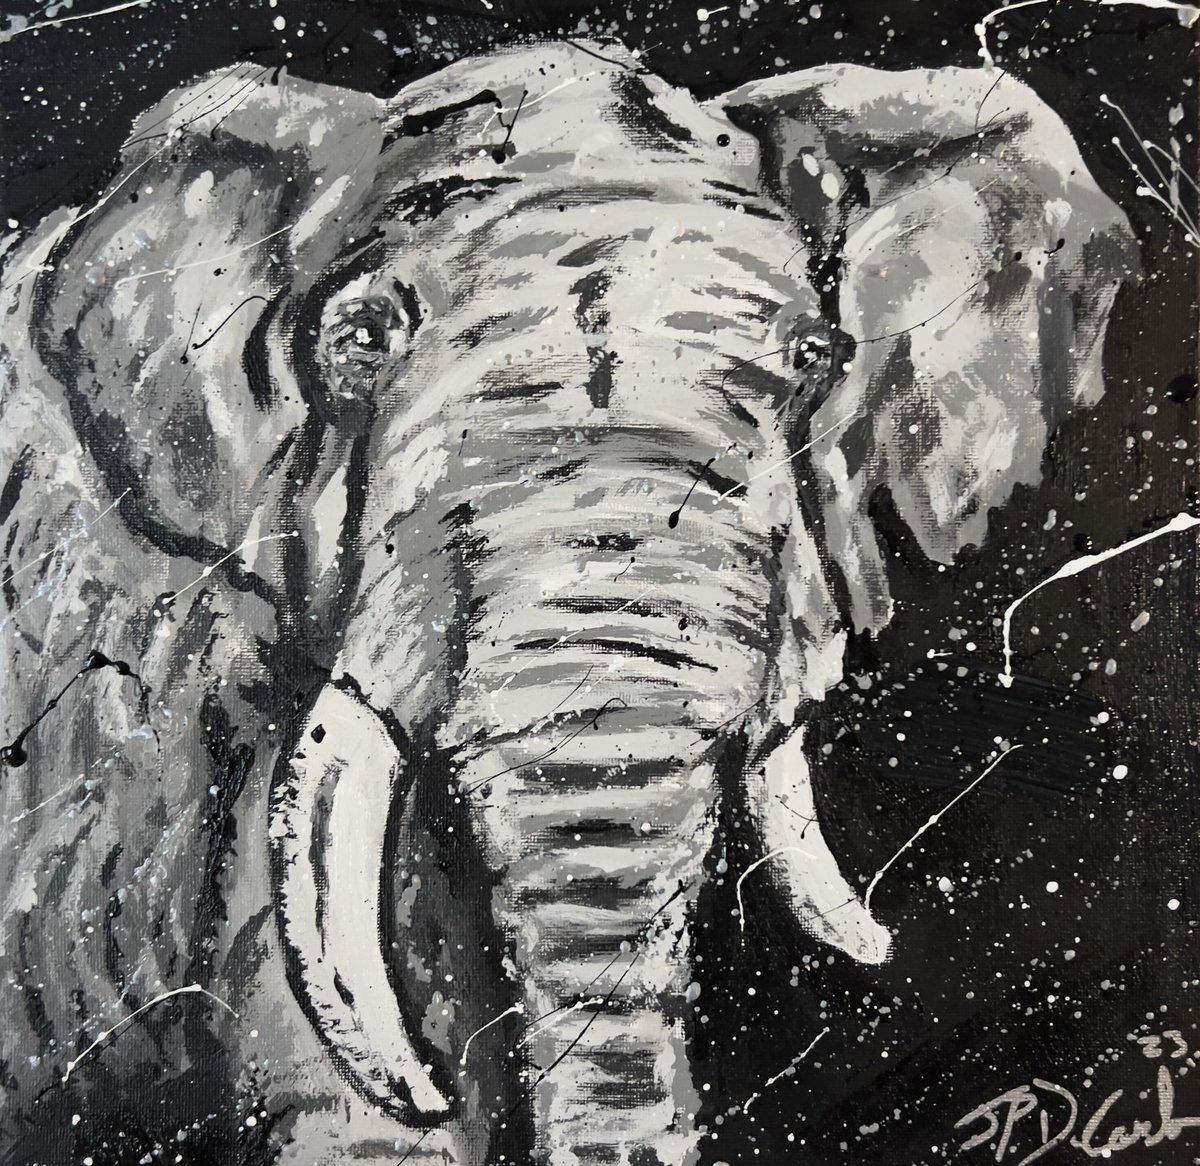 New 12x12 inch Elephant for your collection 😉

jpdicarloart.com

#elephant #wildlife #safari #art #artoftheday #painting #acrylicpainting #wakeupyourwalls #elephants #elephantart